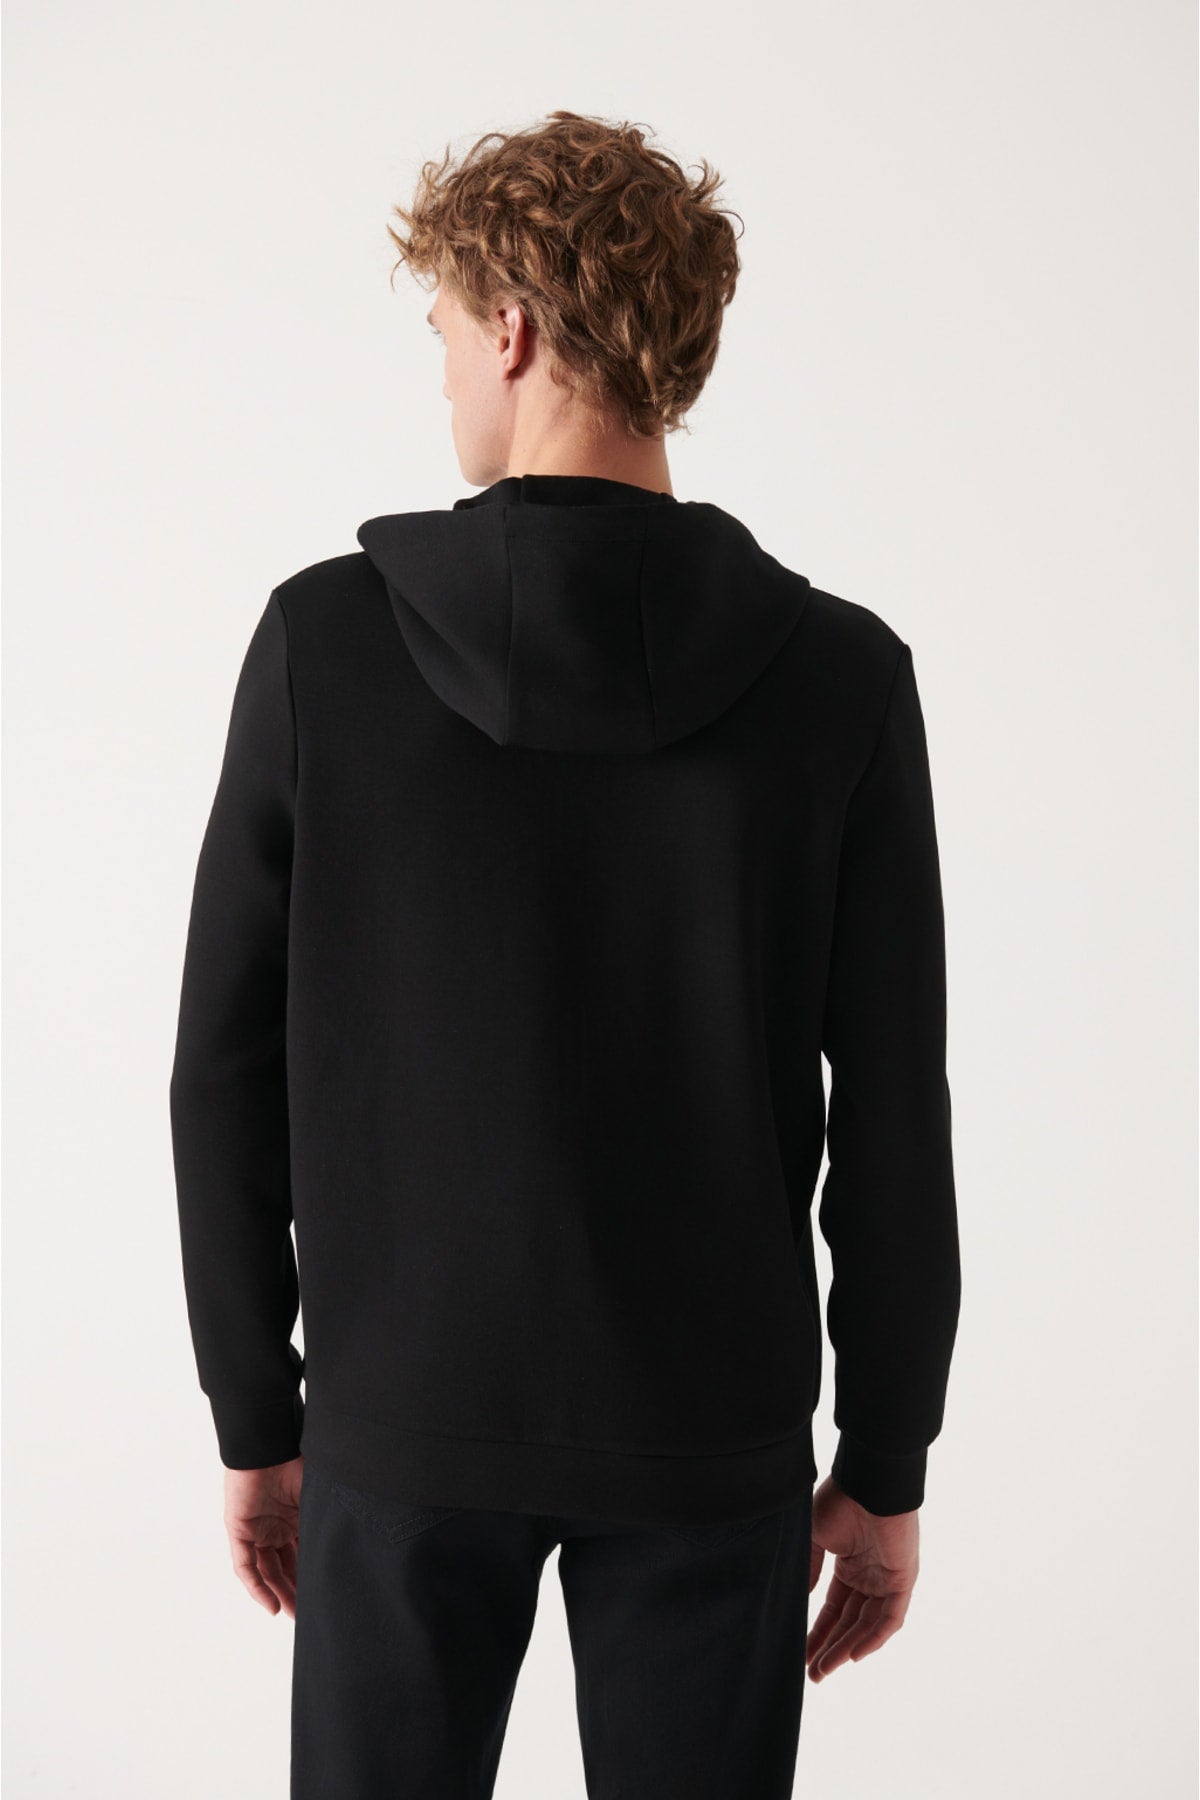 Men's black hooded cotton interlok fabric zipper sweatshirt cardigan B001102